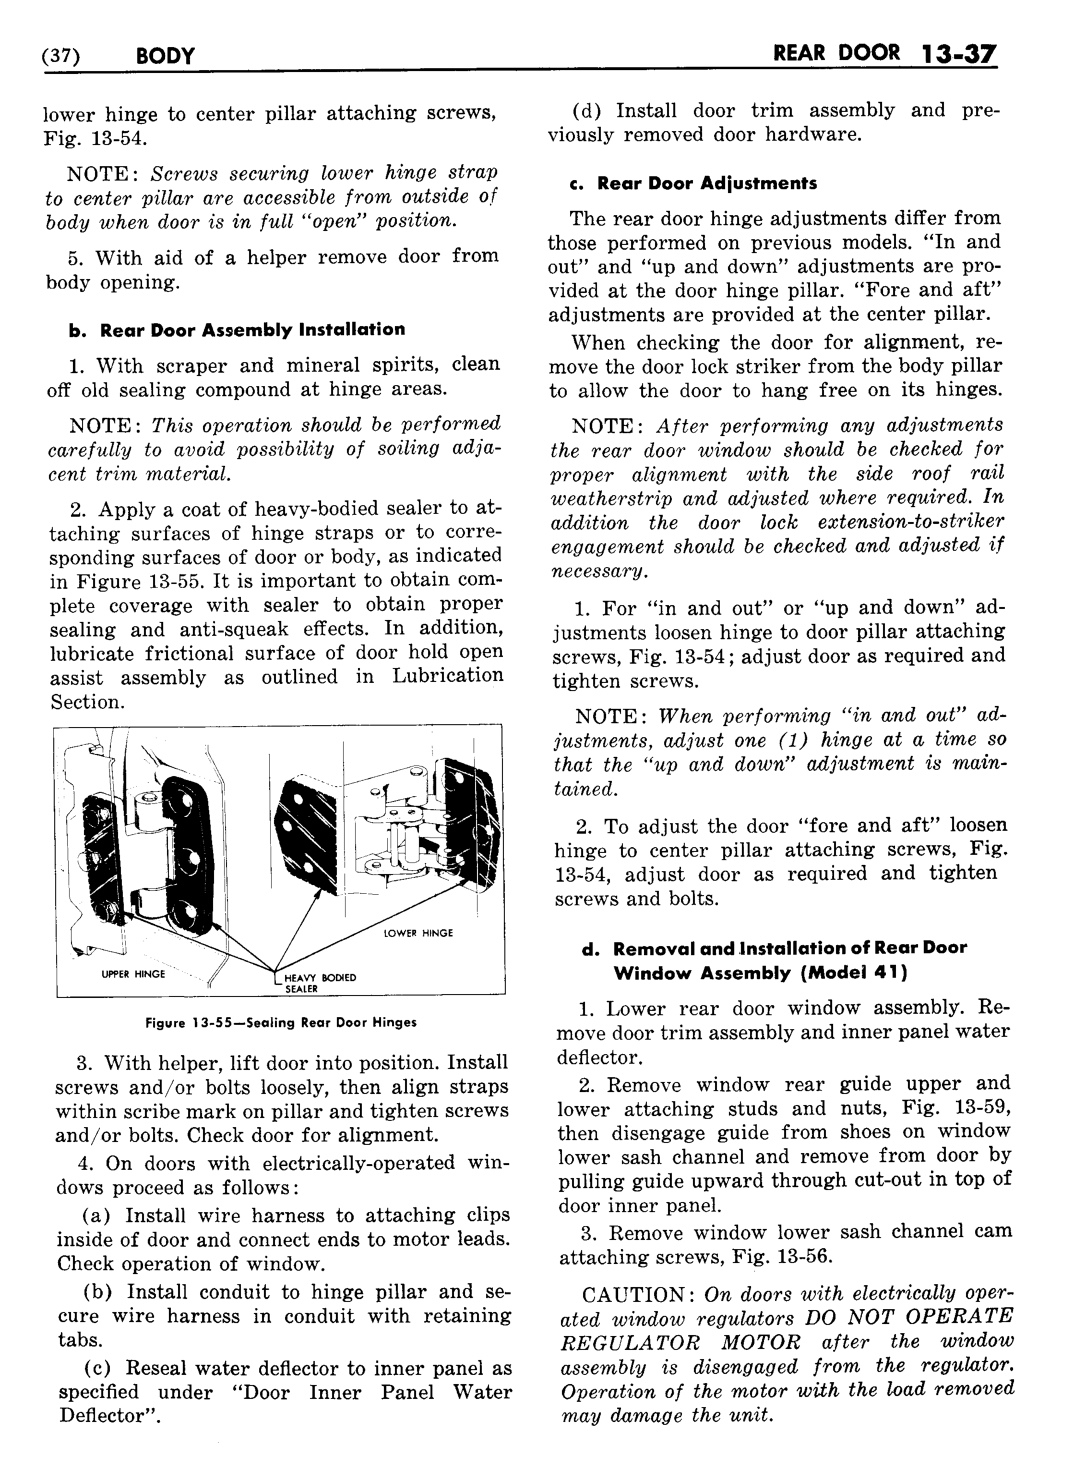 n_1957 Buick Body Service Manual-039-039.jpg